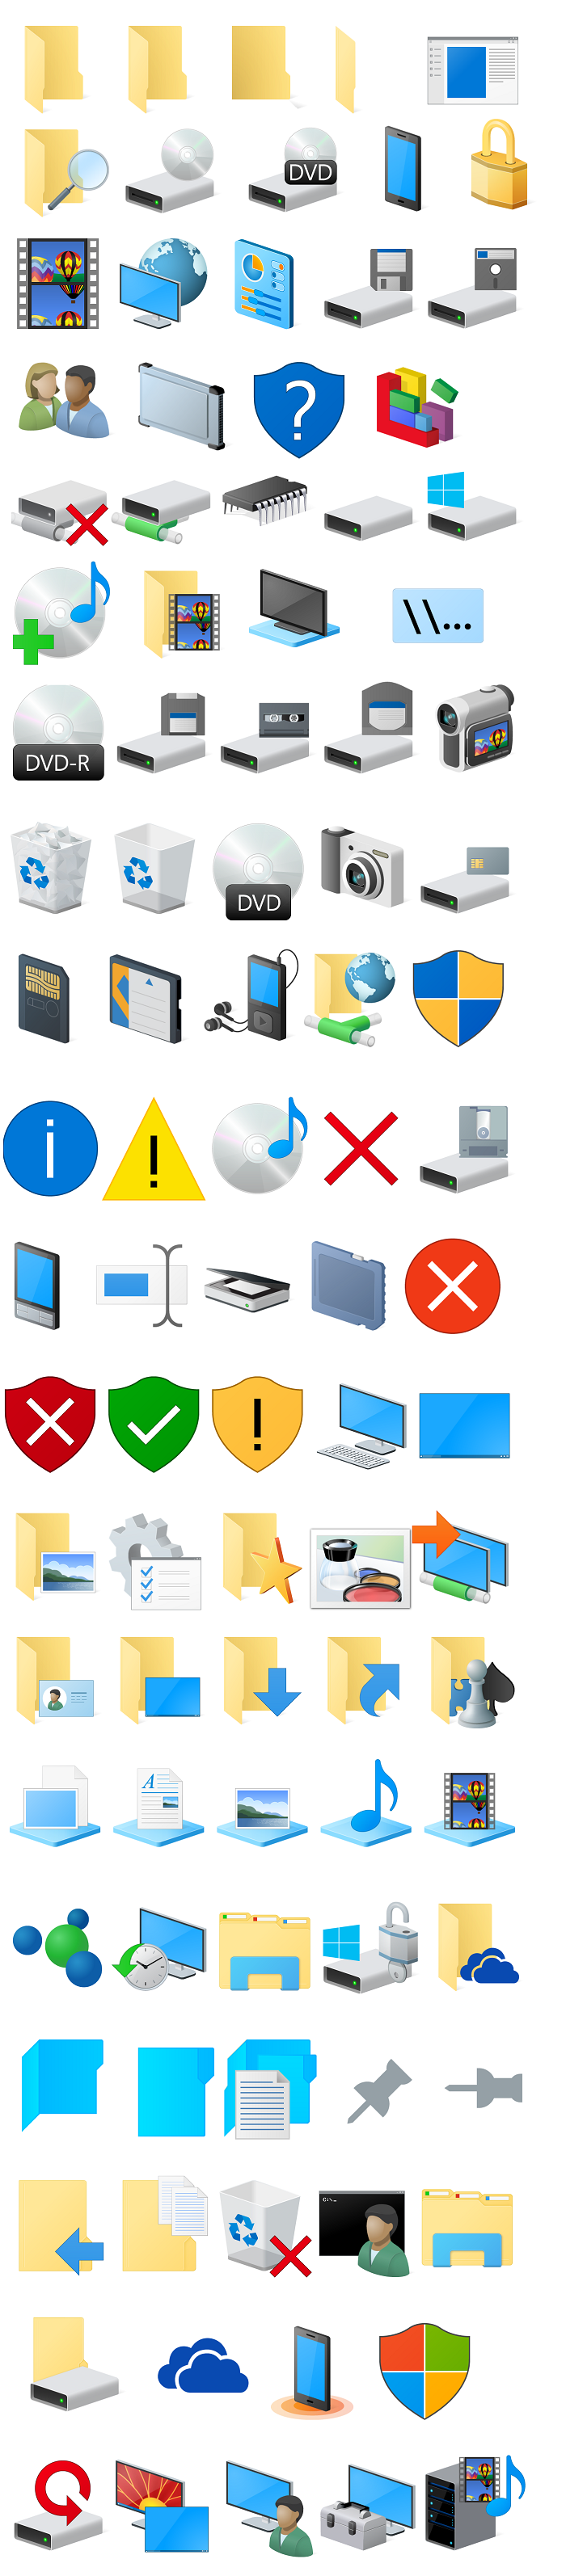 icon packs windows 10